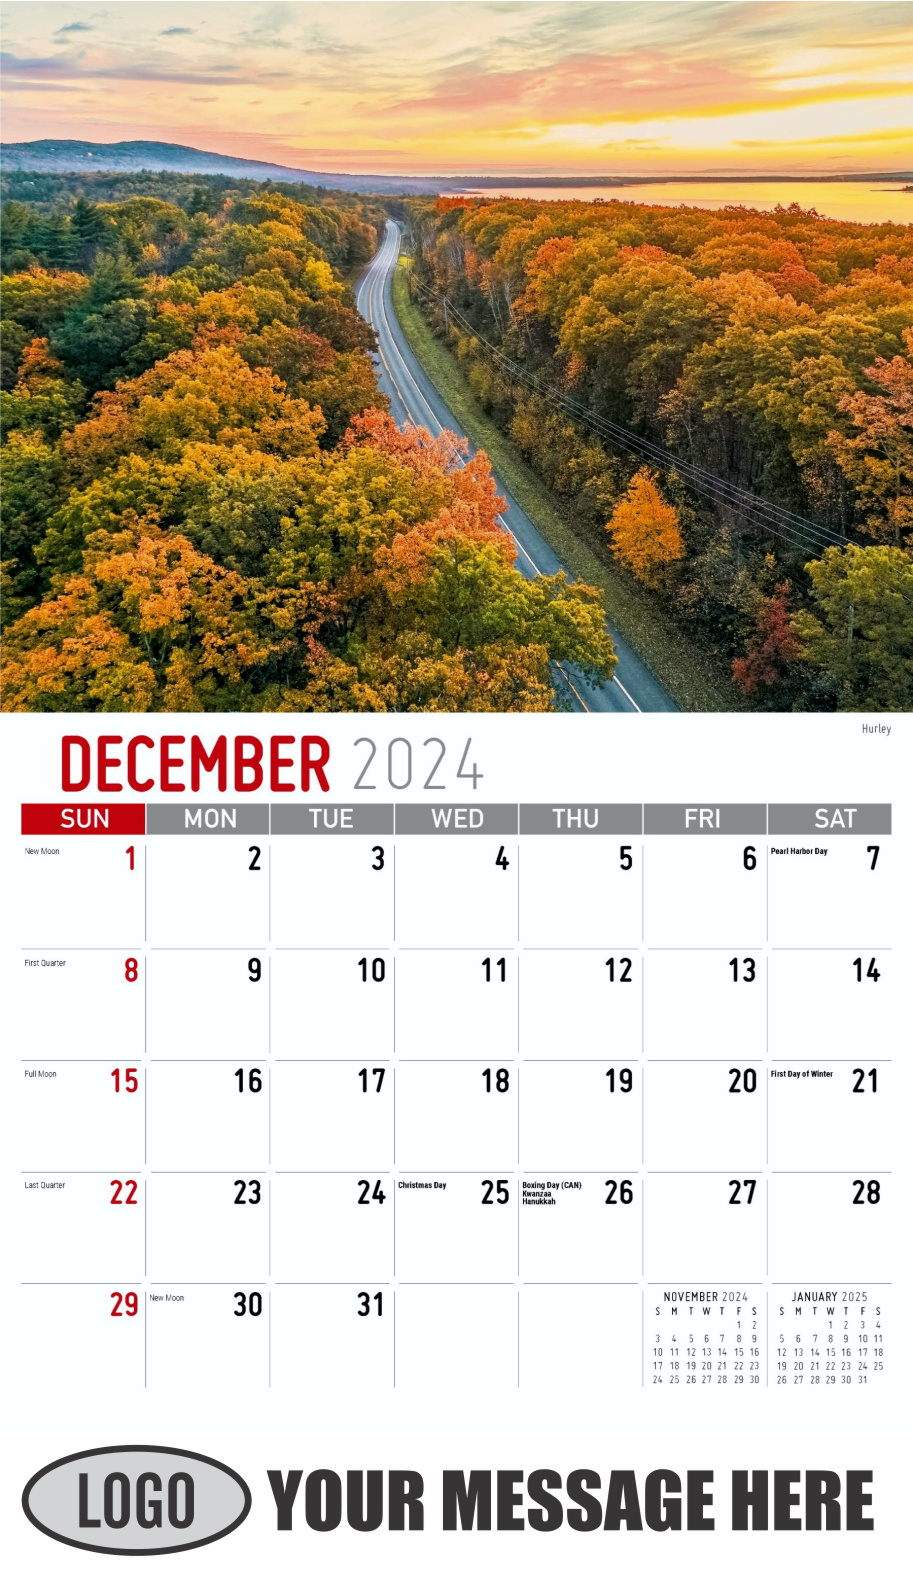 Scenes of New York 2024 Business Promotional Wall Calendar - December